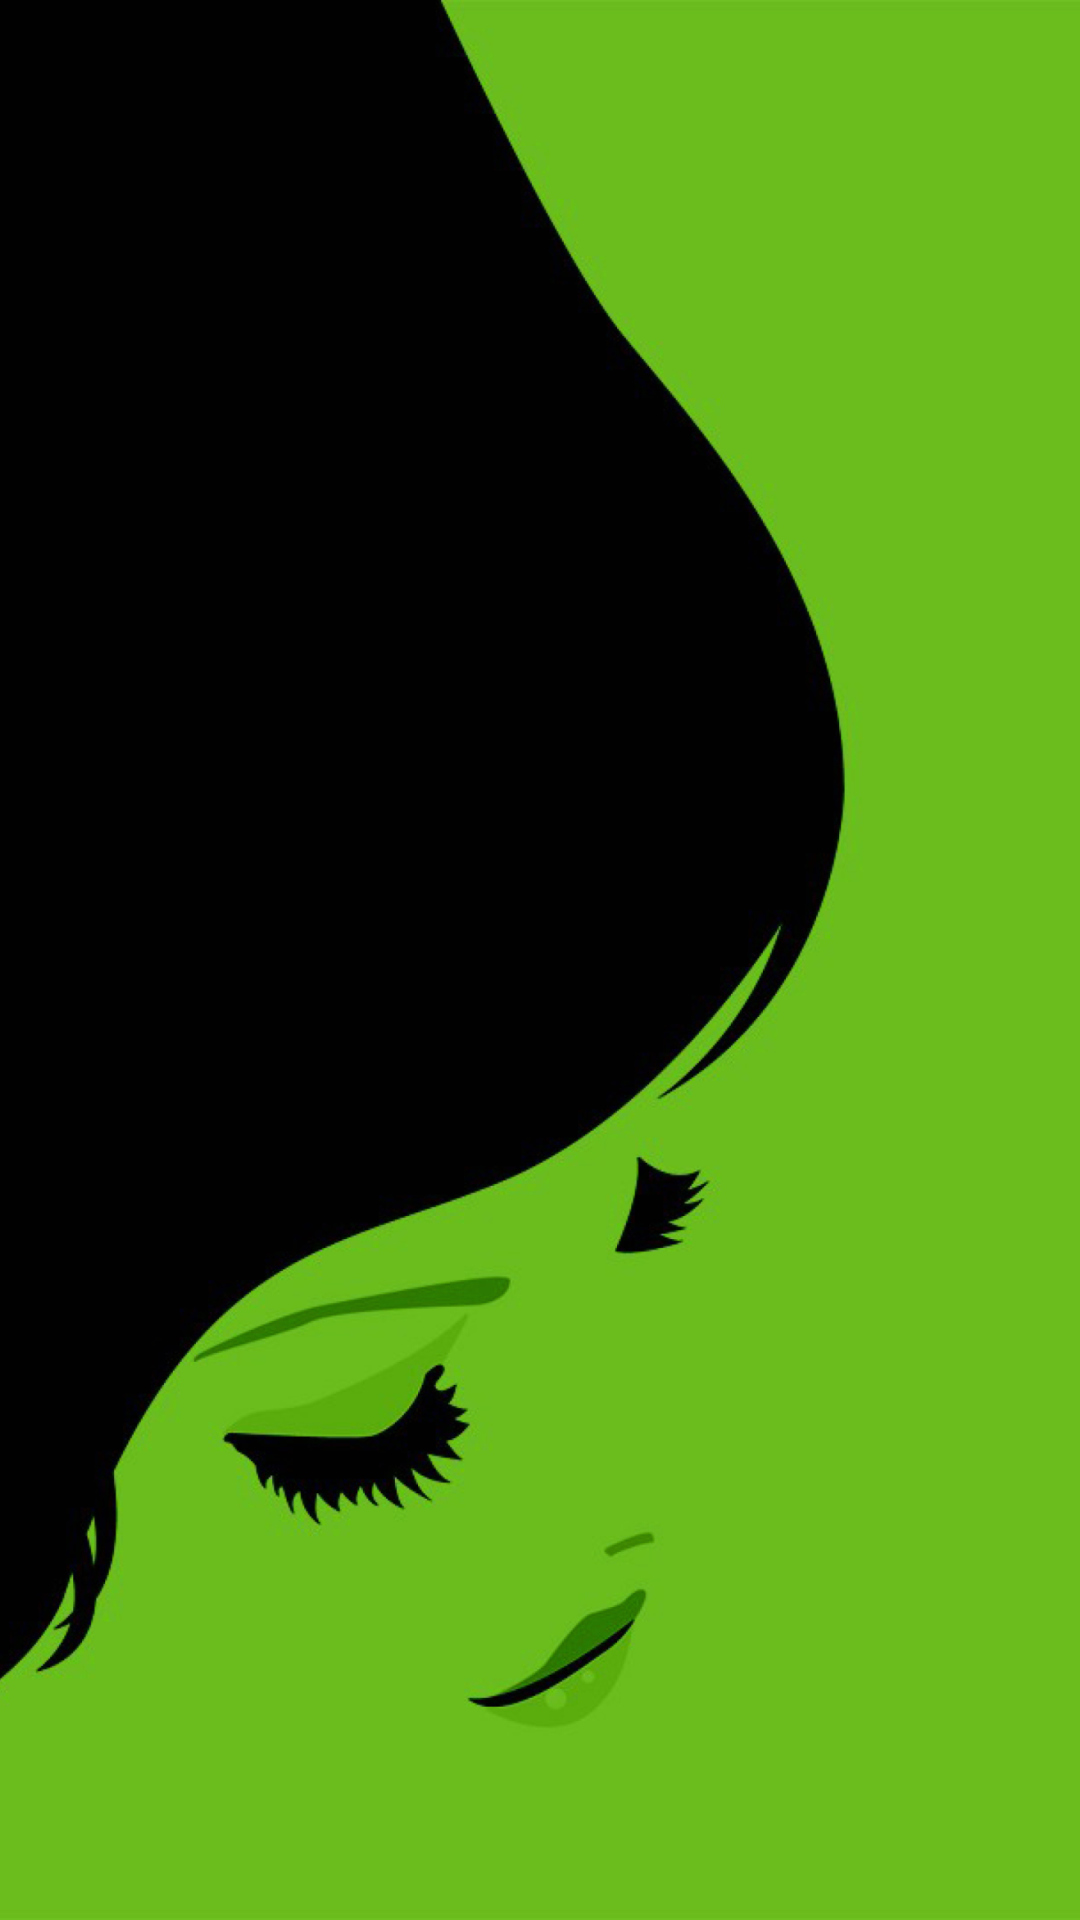 Girl's Face On Green Background screenshot #1 1080x1920